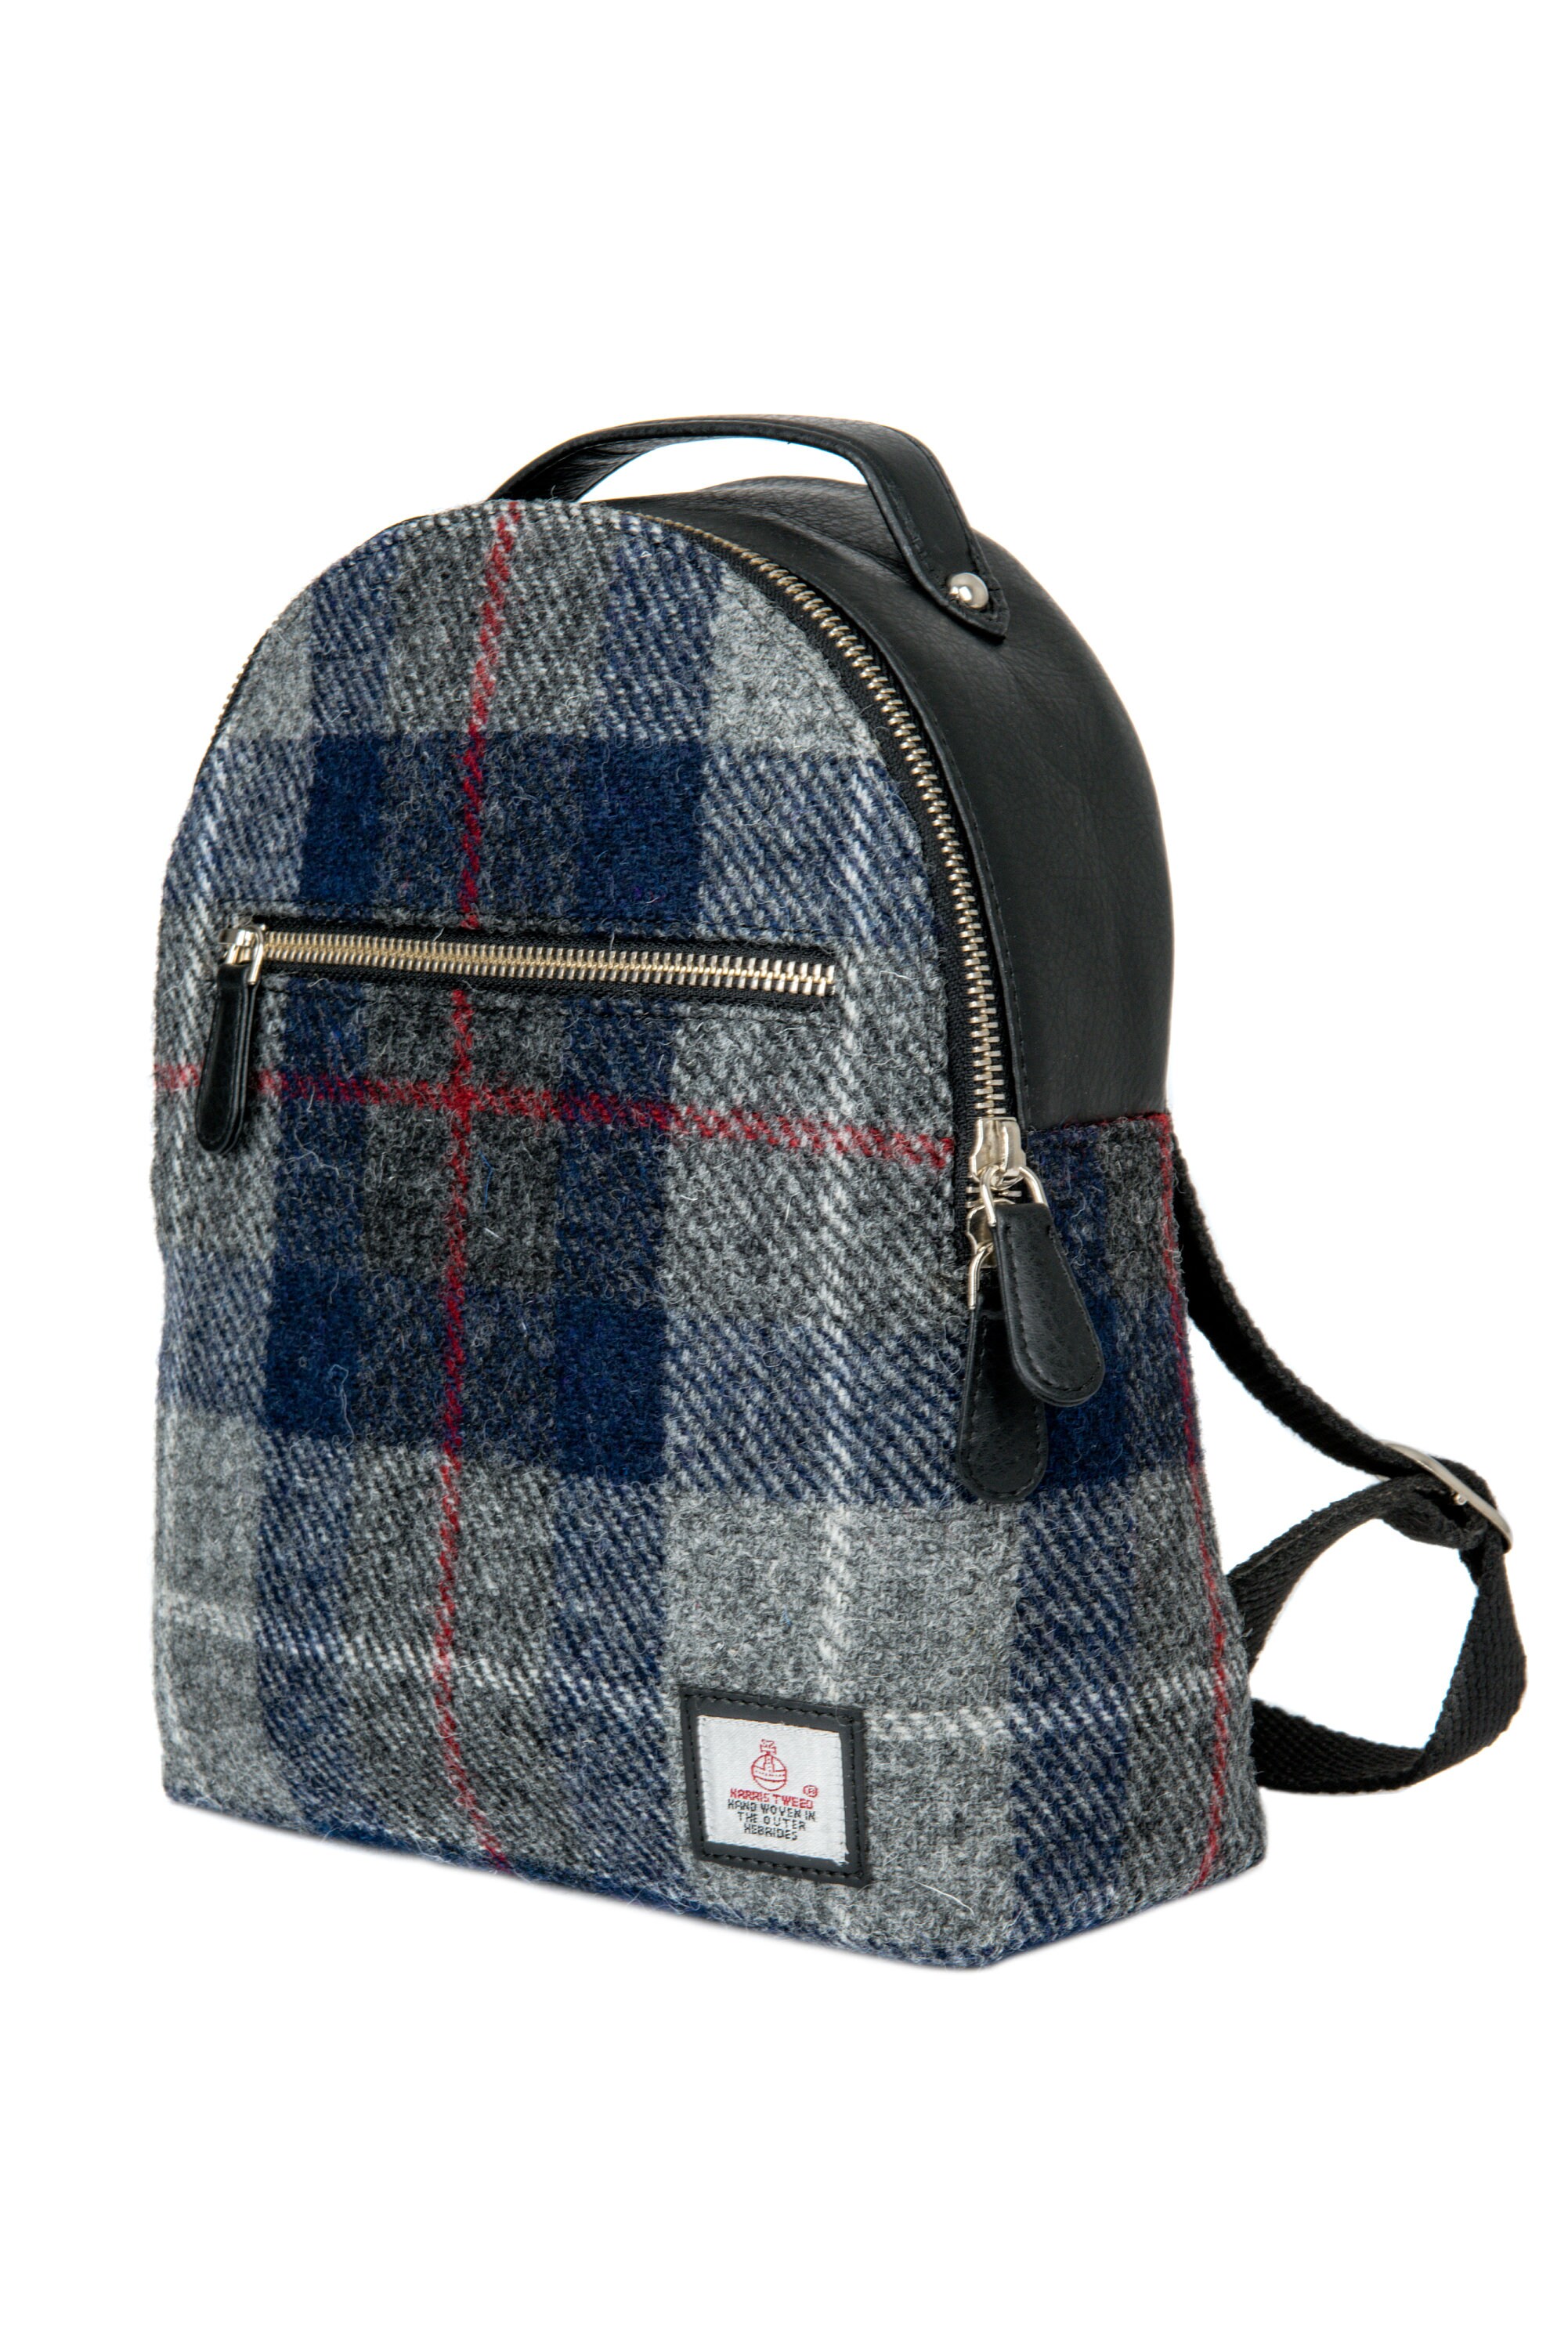 Mini Backpack Purse in Blue Harris Tweed Small Backpack - Etsy UK